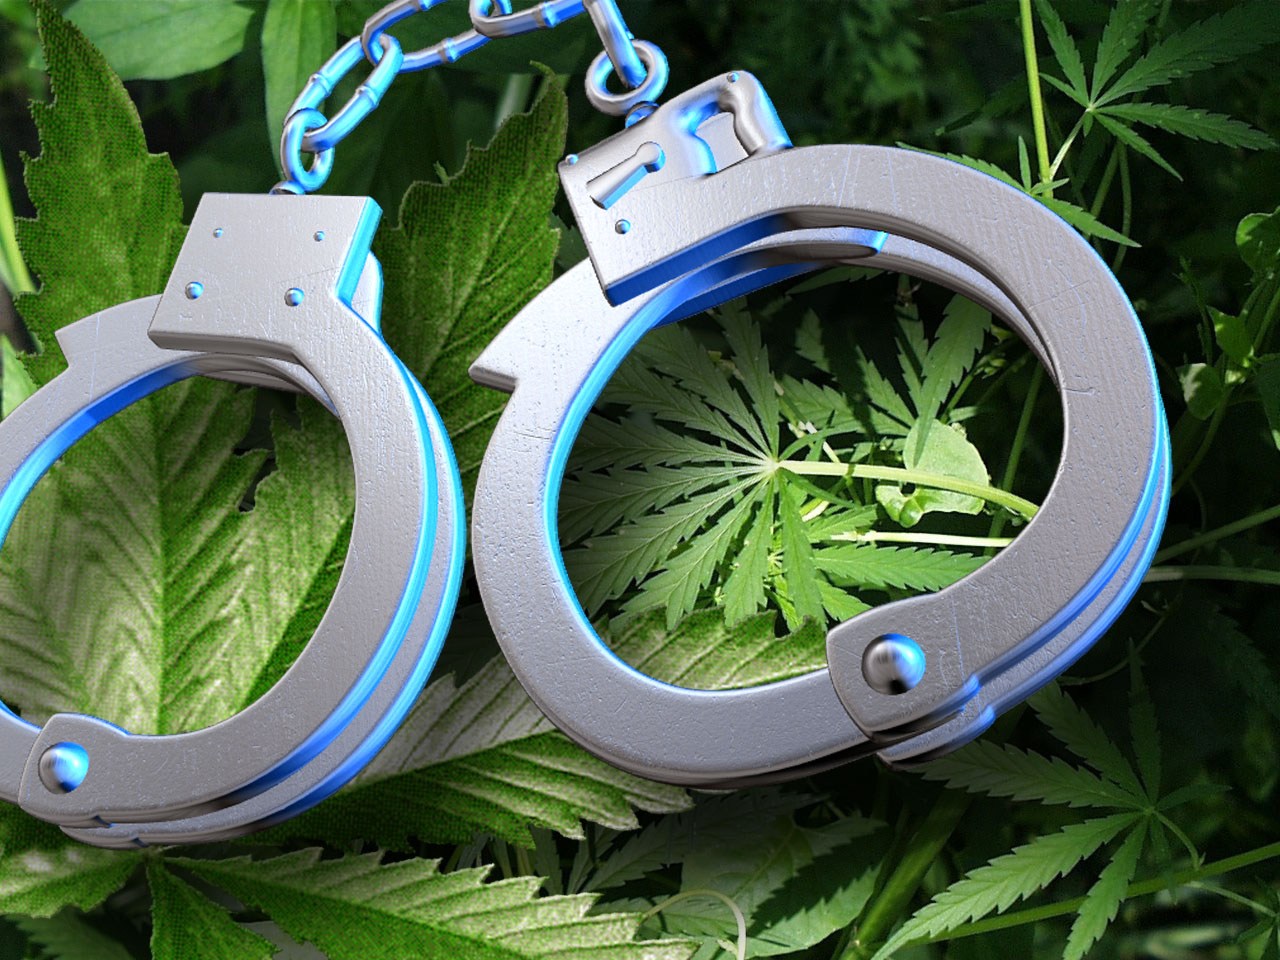 Medible review ny buffalo report shows stark marijuana arrest disparities